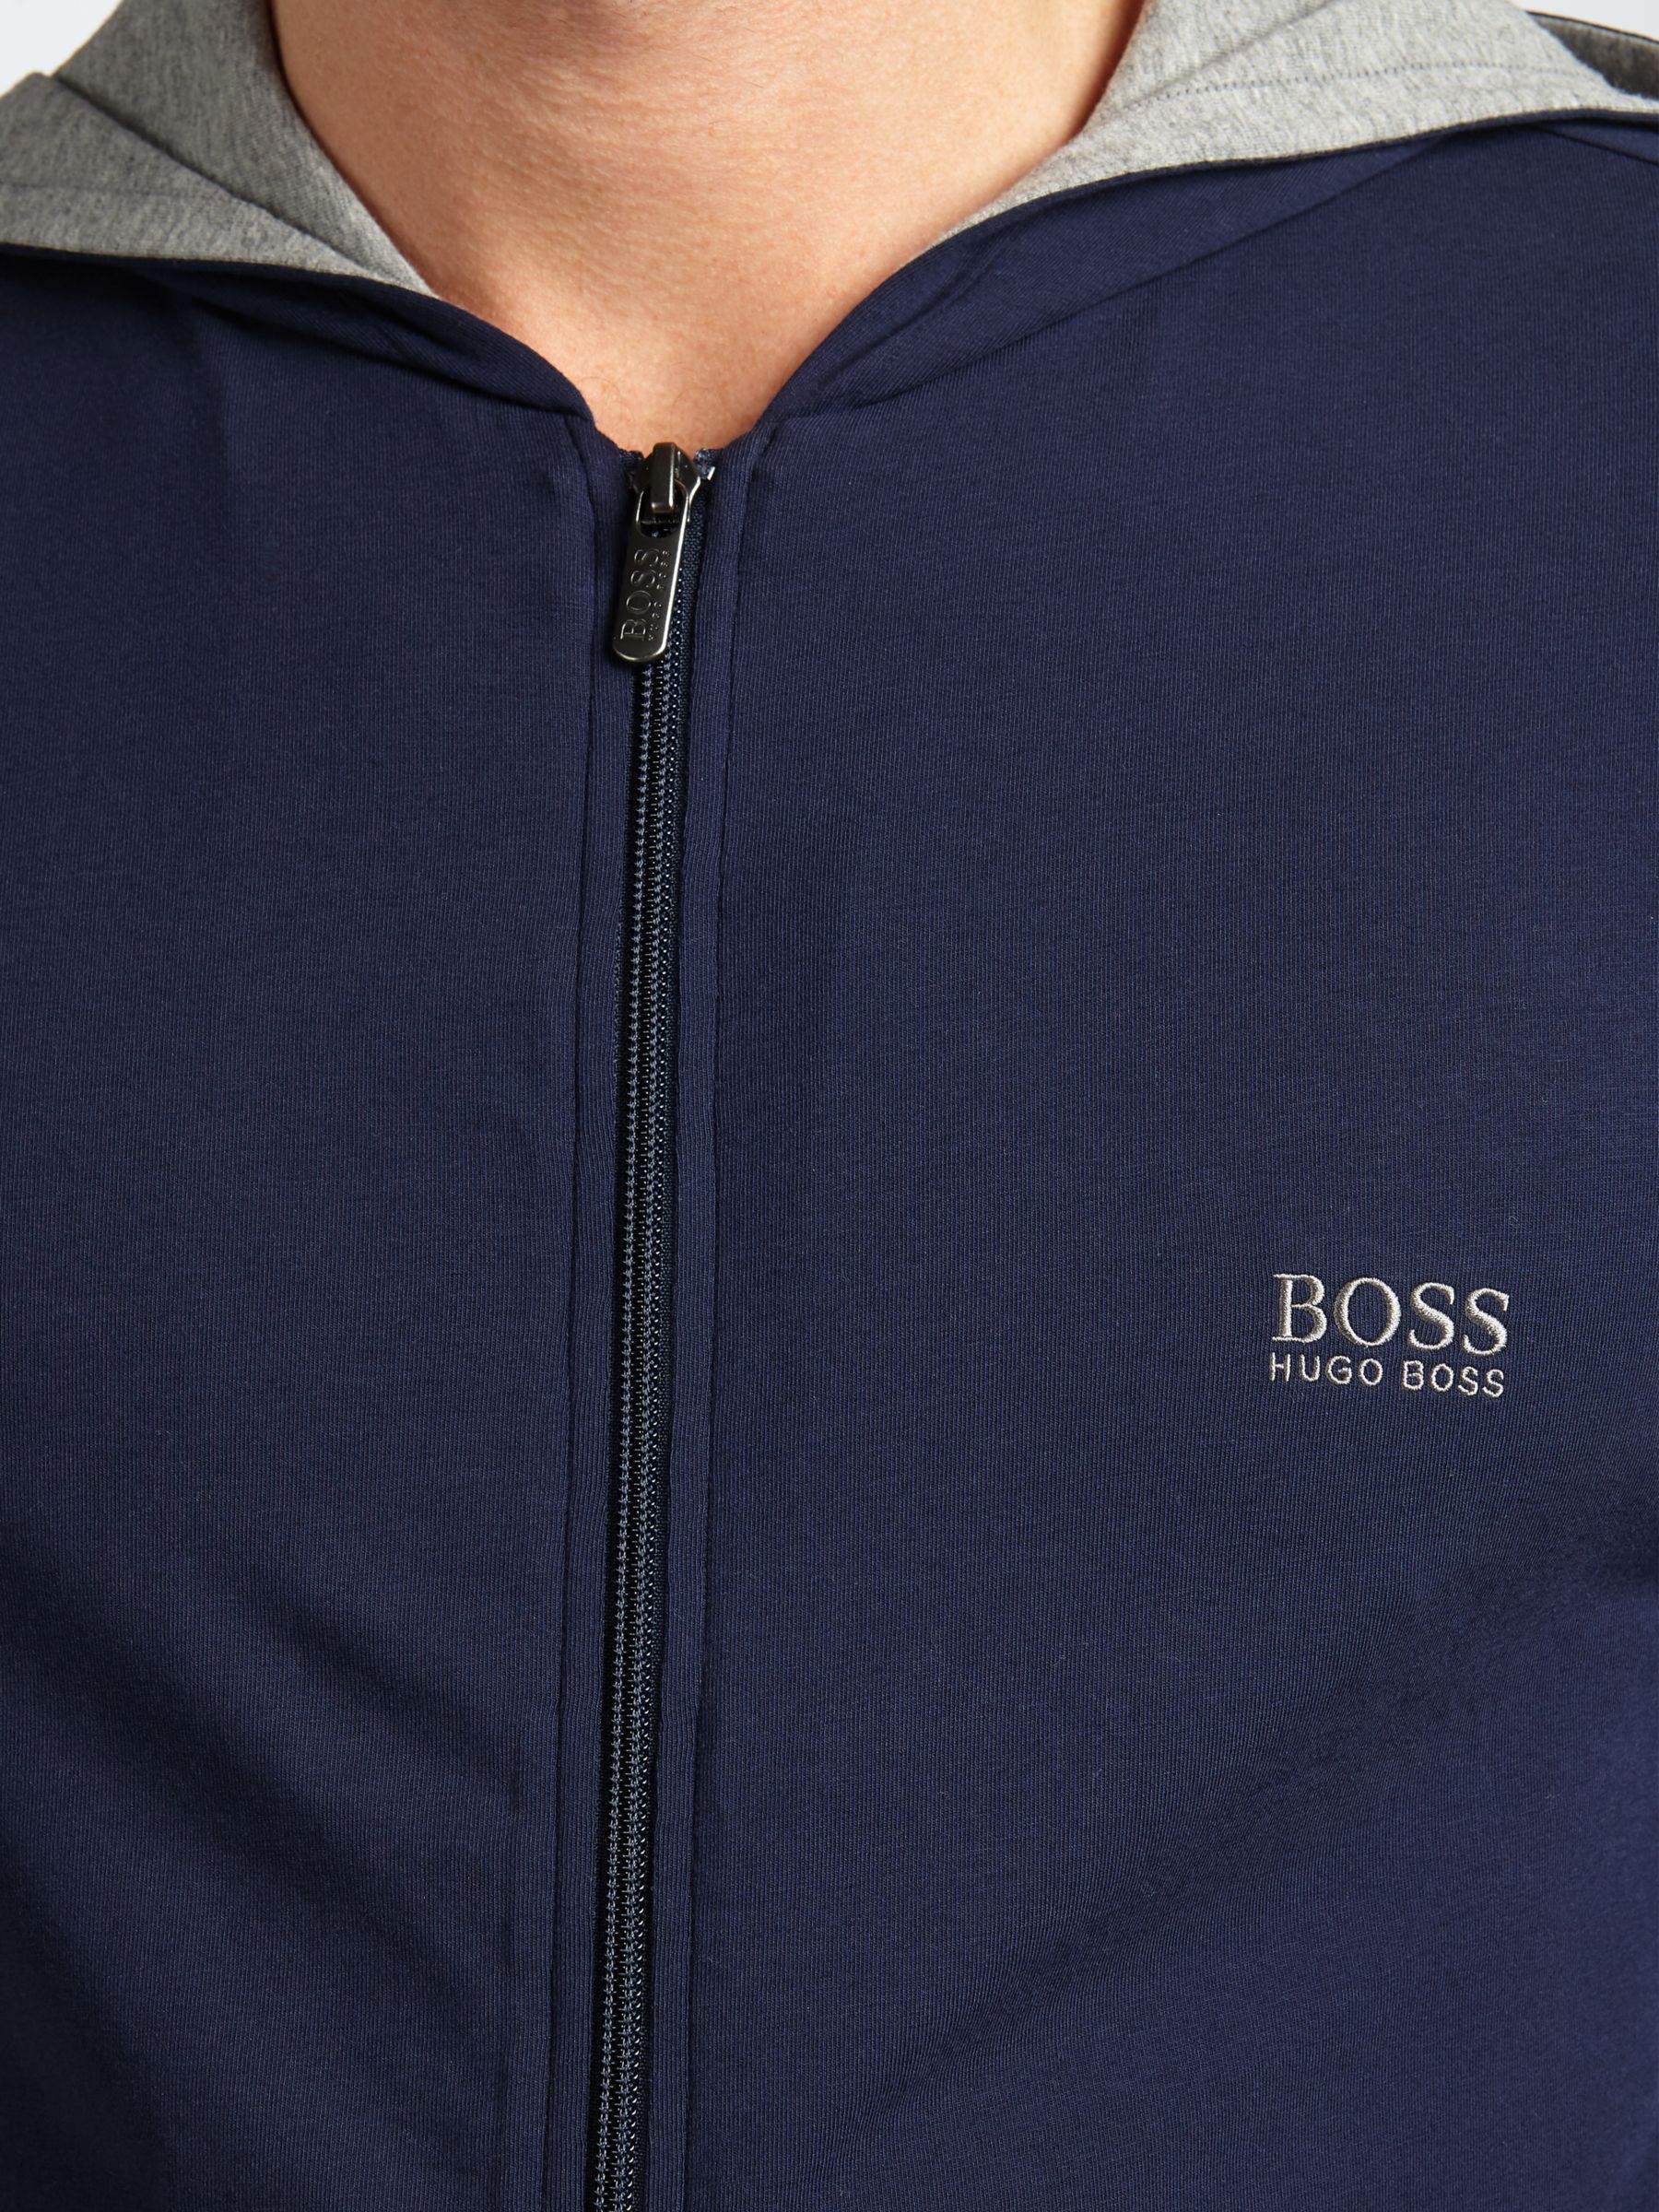 boss hugo boss full zip hoodie navy